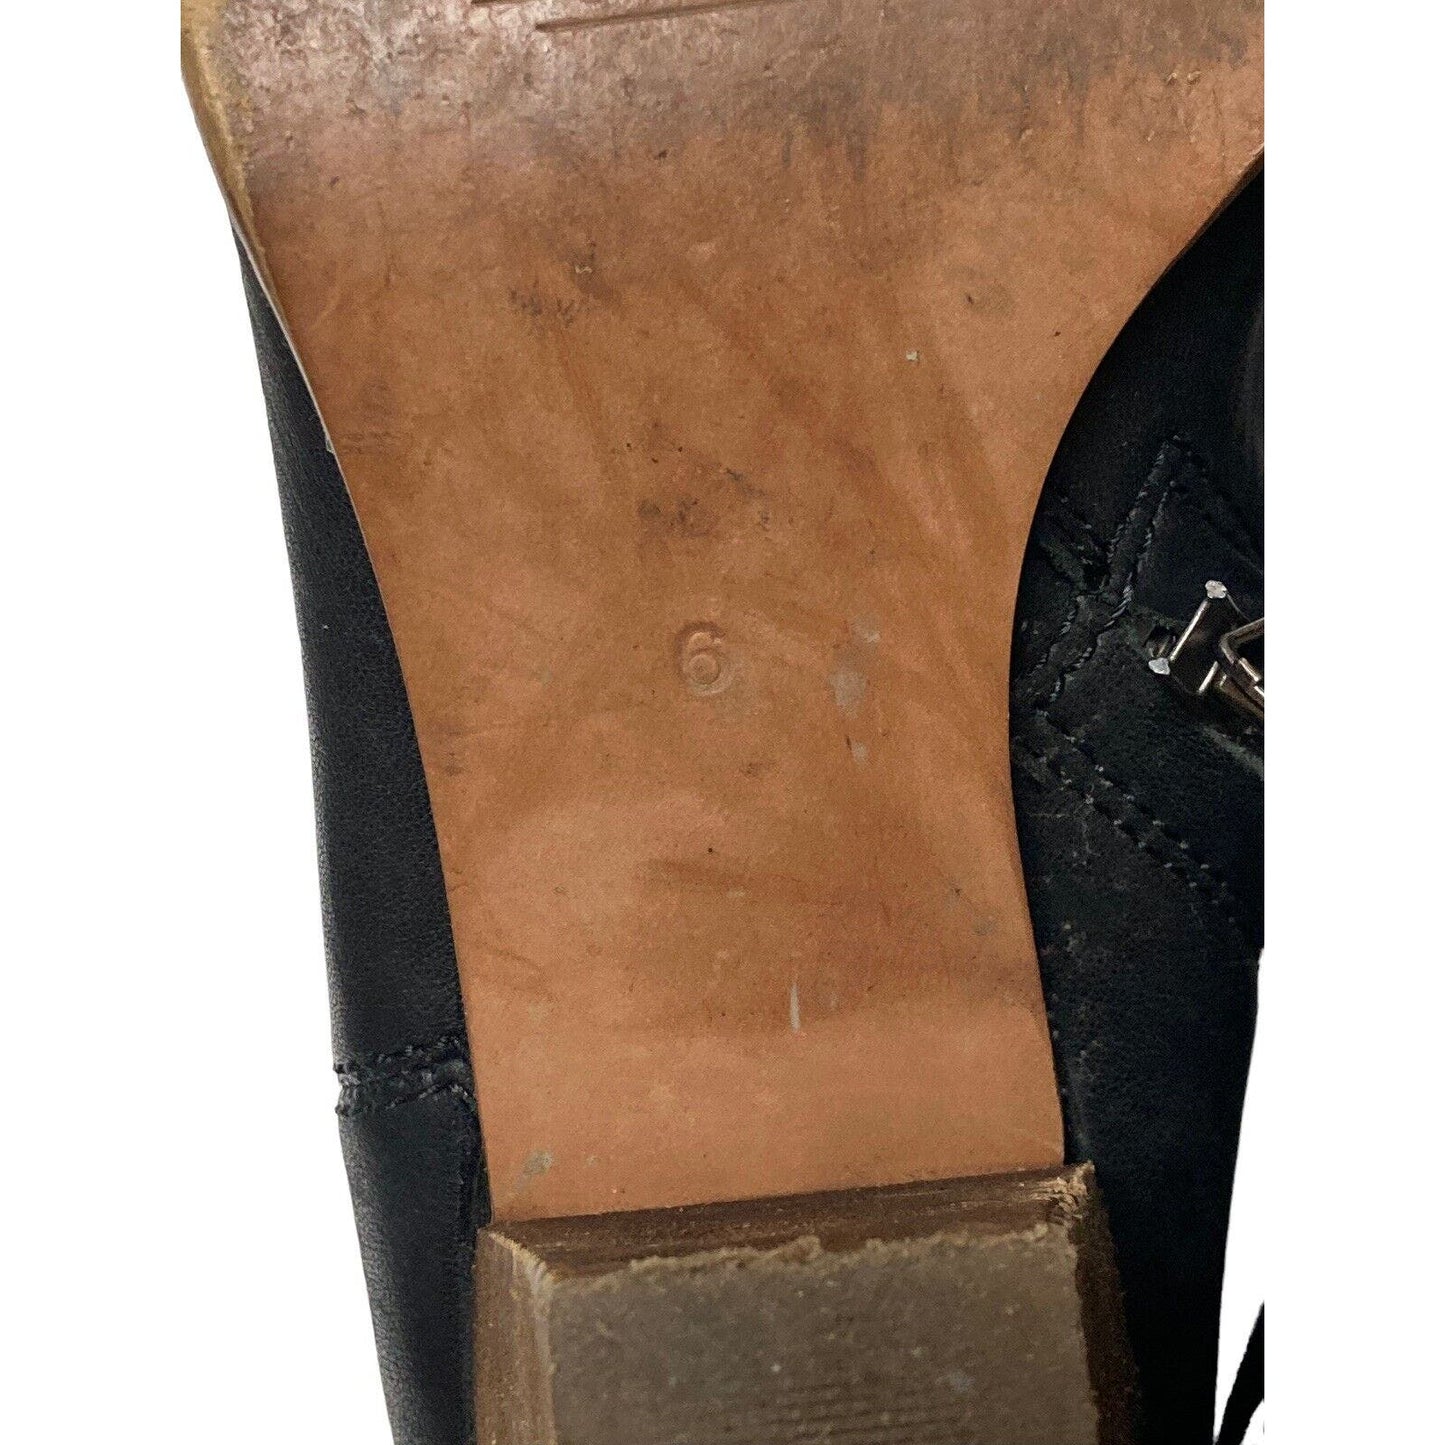 Madewell Women's The Billie Boot Size 6 Black Leather Block Heel Boho Western